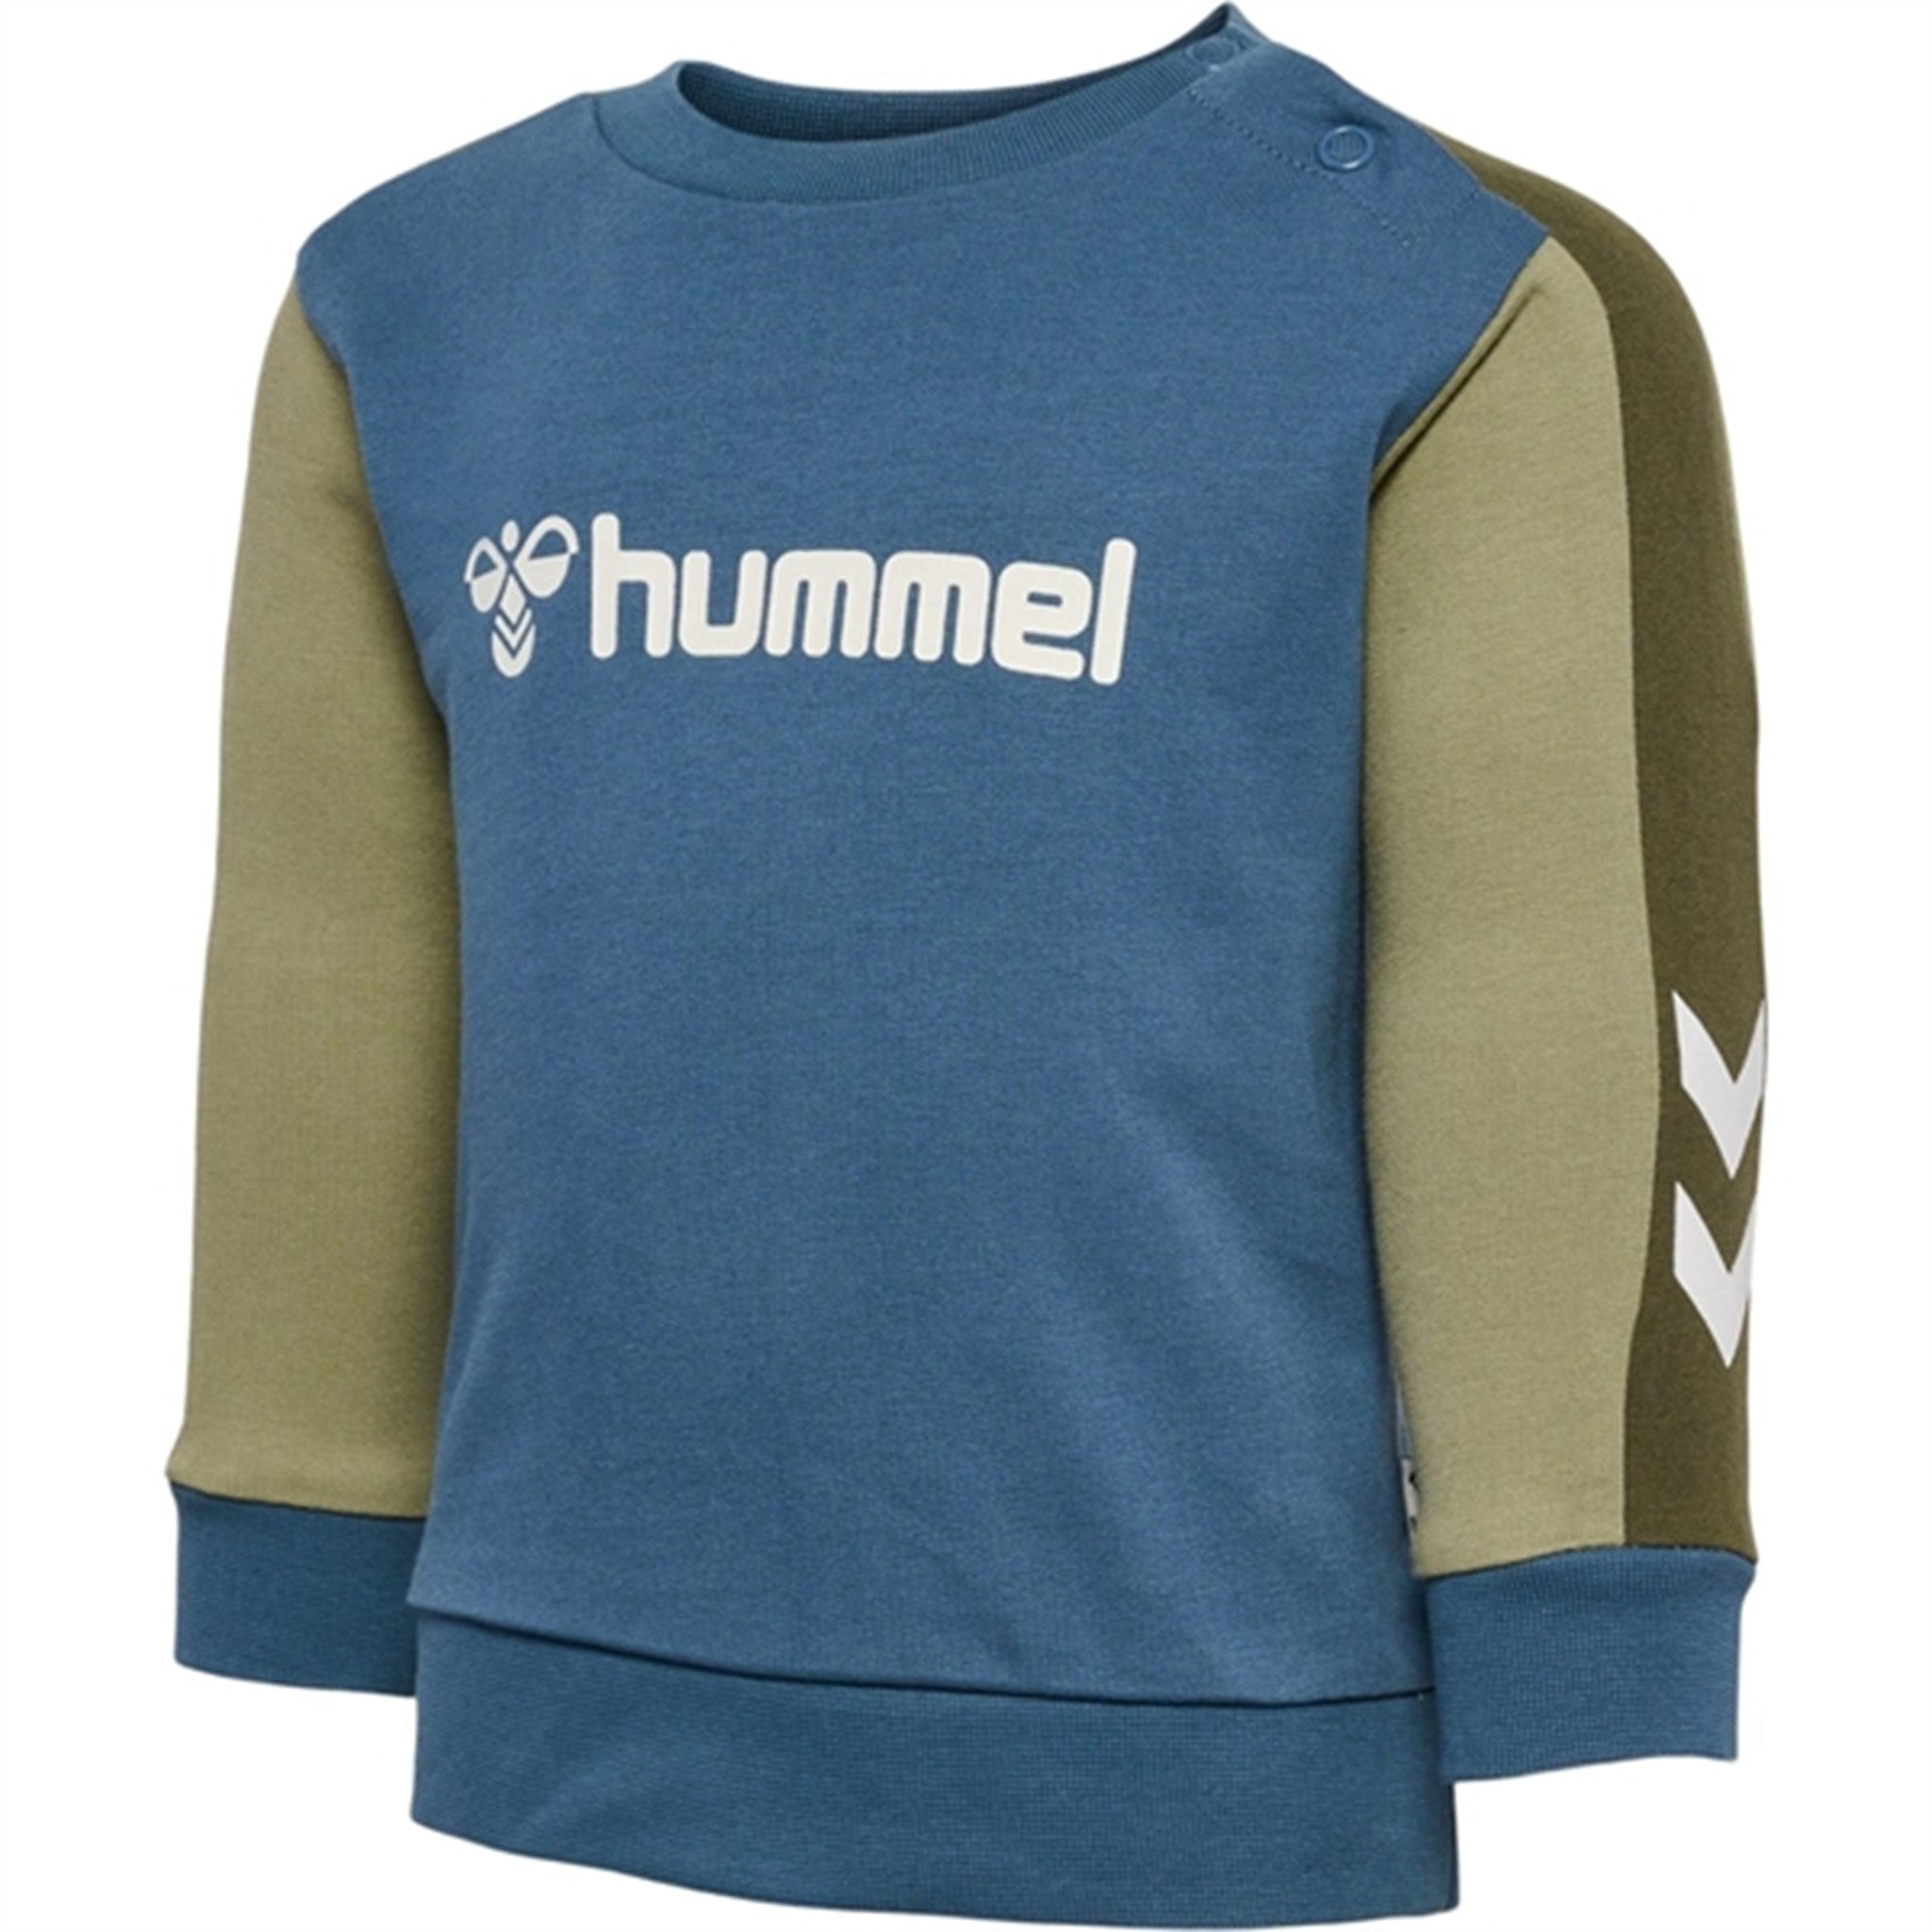 Hummel Bering Sea Eddo Sweatshirt 3